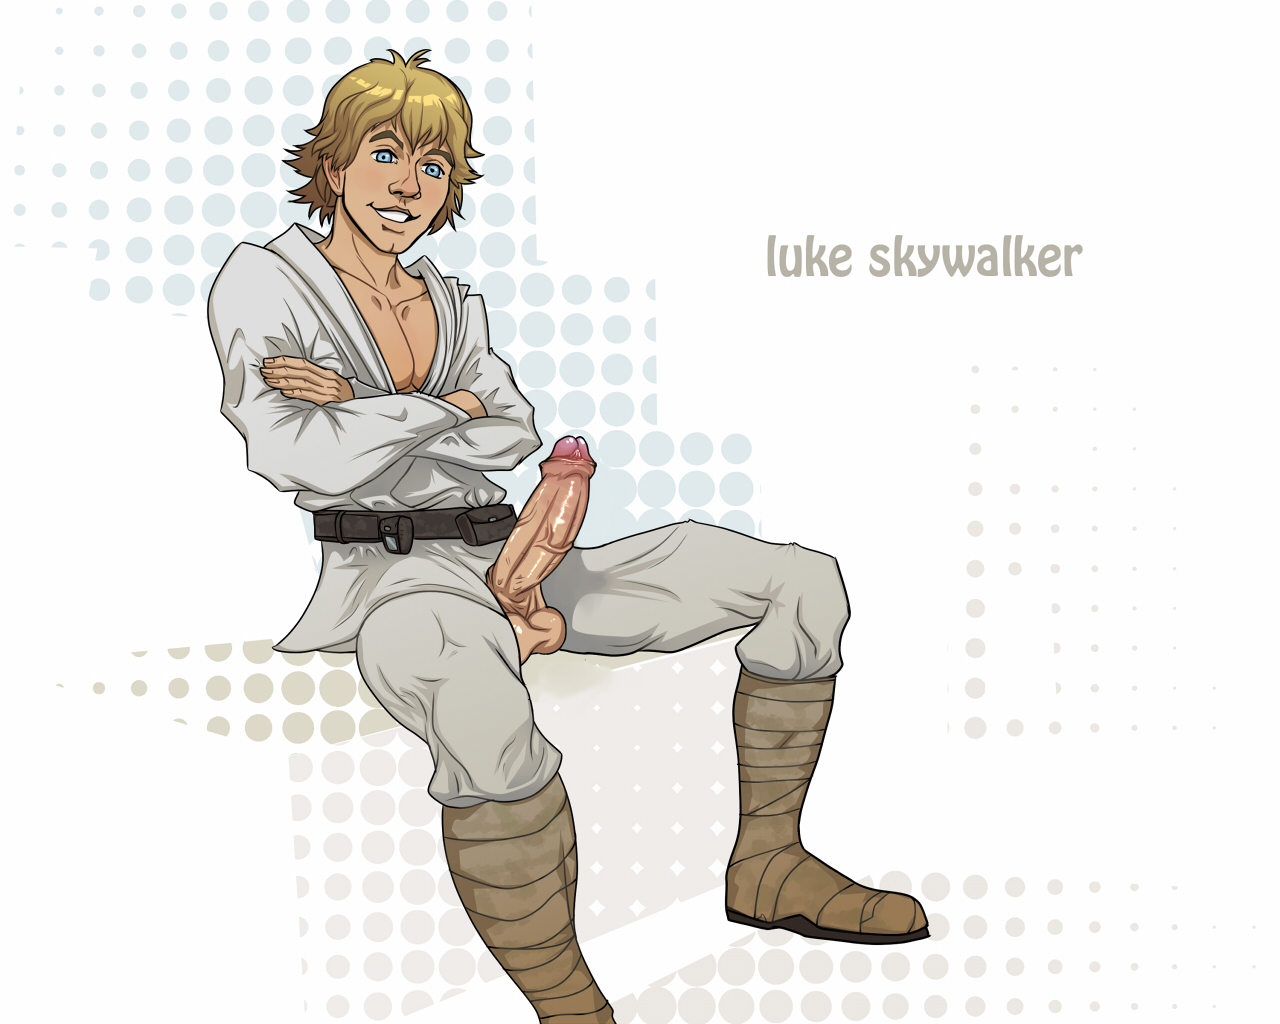 574430 - Luke_Skywalker Star_Wars anma.jpg.